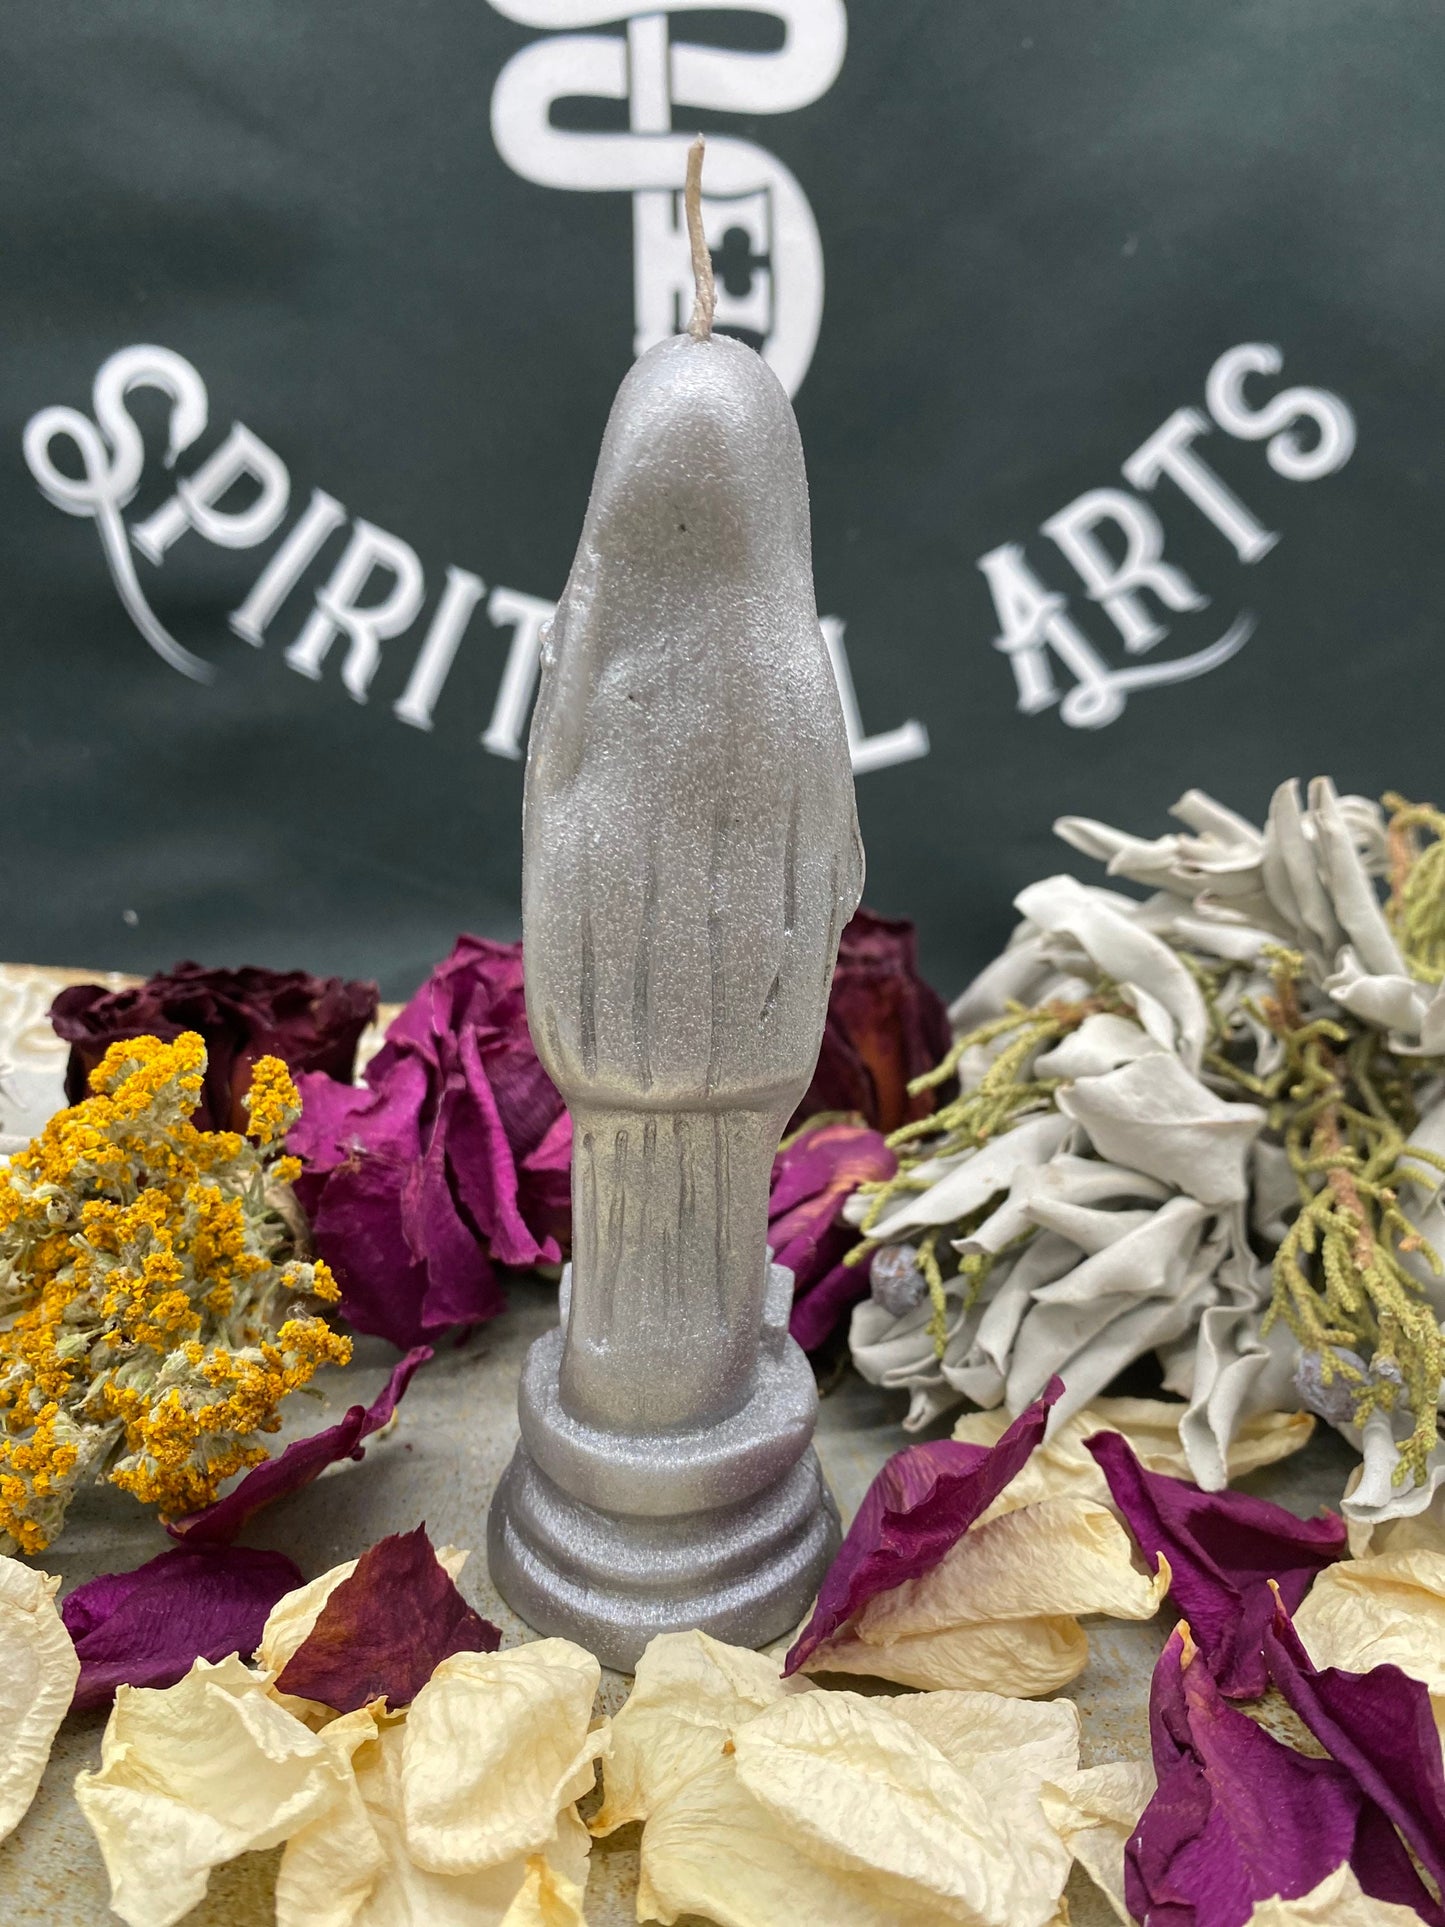 Santa Muerte Plata Figure Candle + Sterling Silver + Improve Finances + Gambling